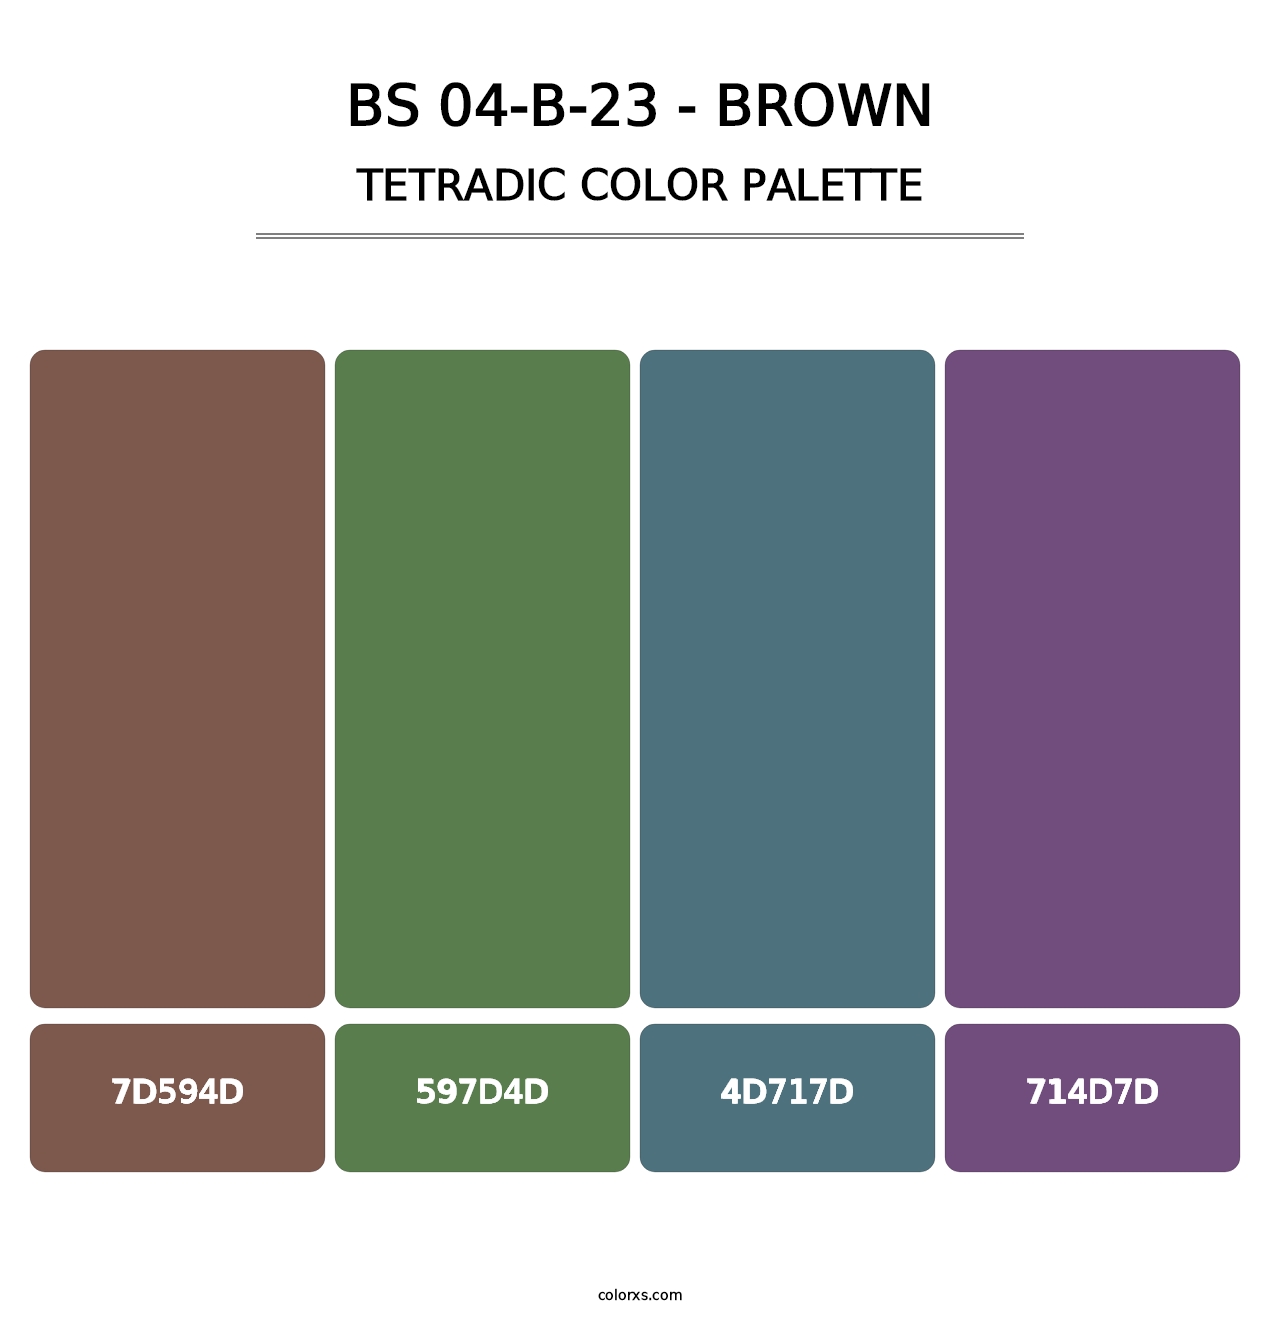 BS 04-B-23 - Brown - Tetradic Color Palette